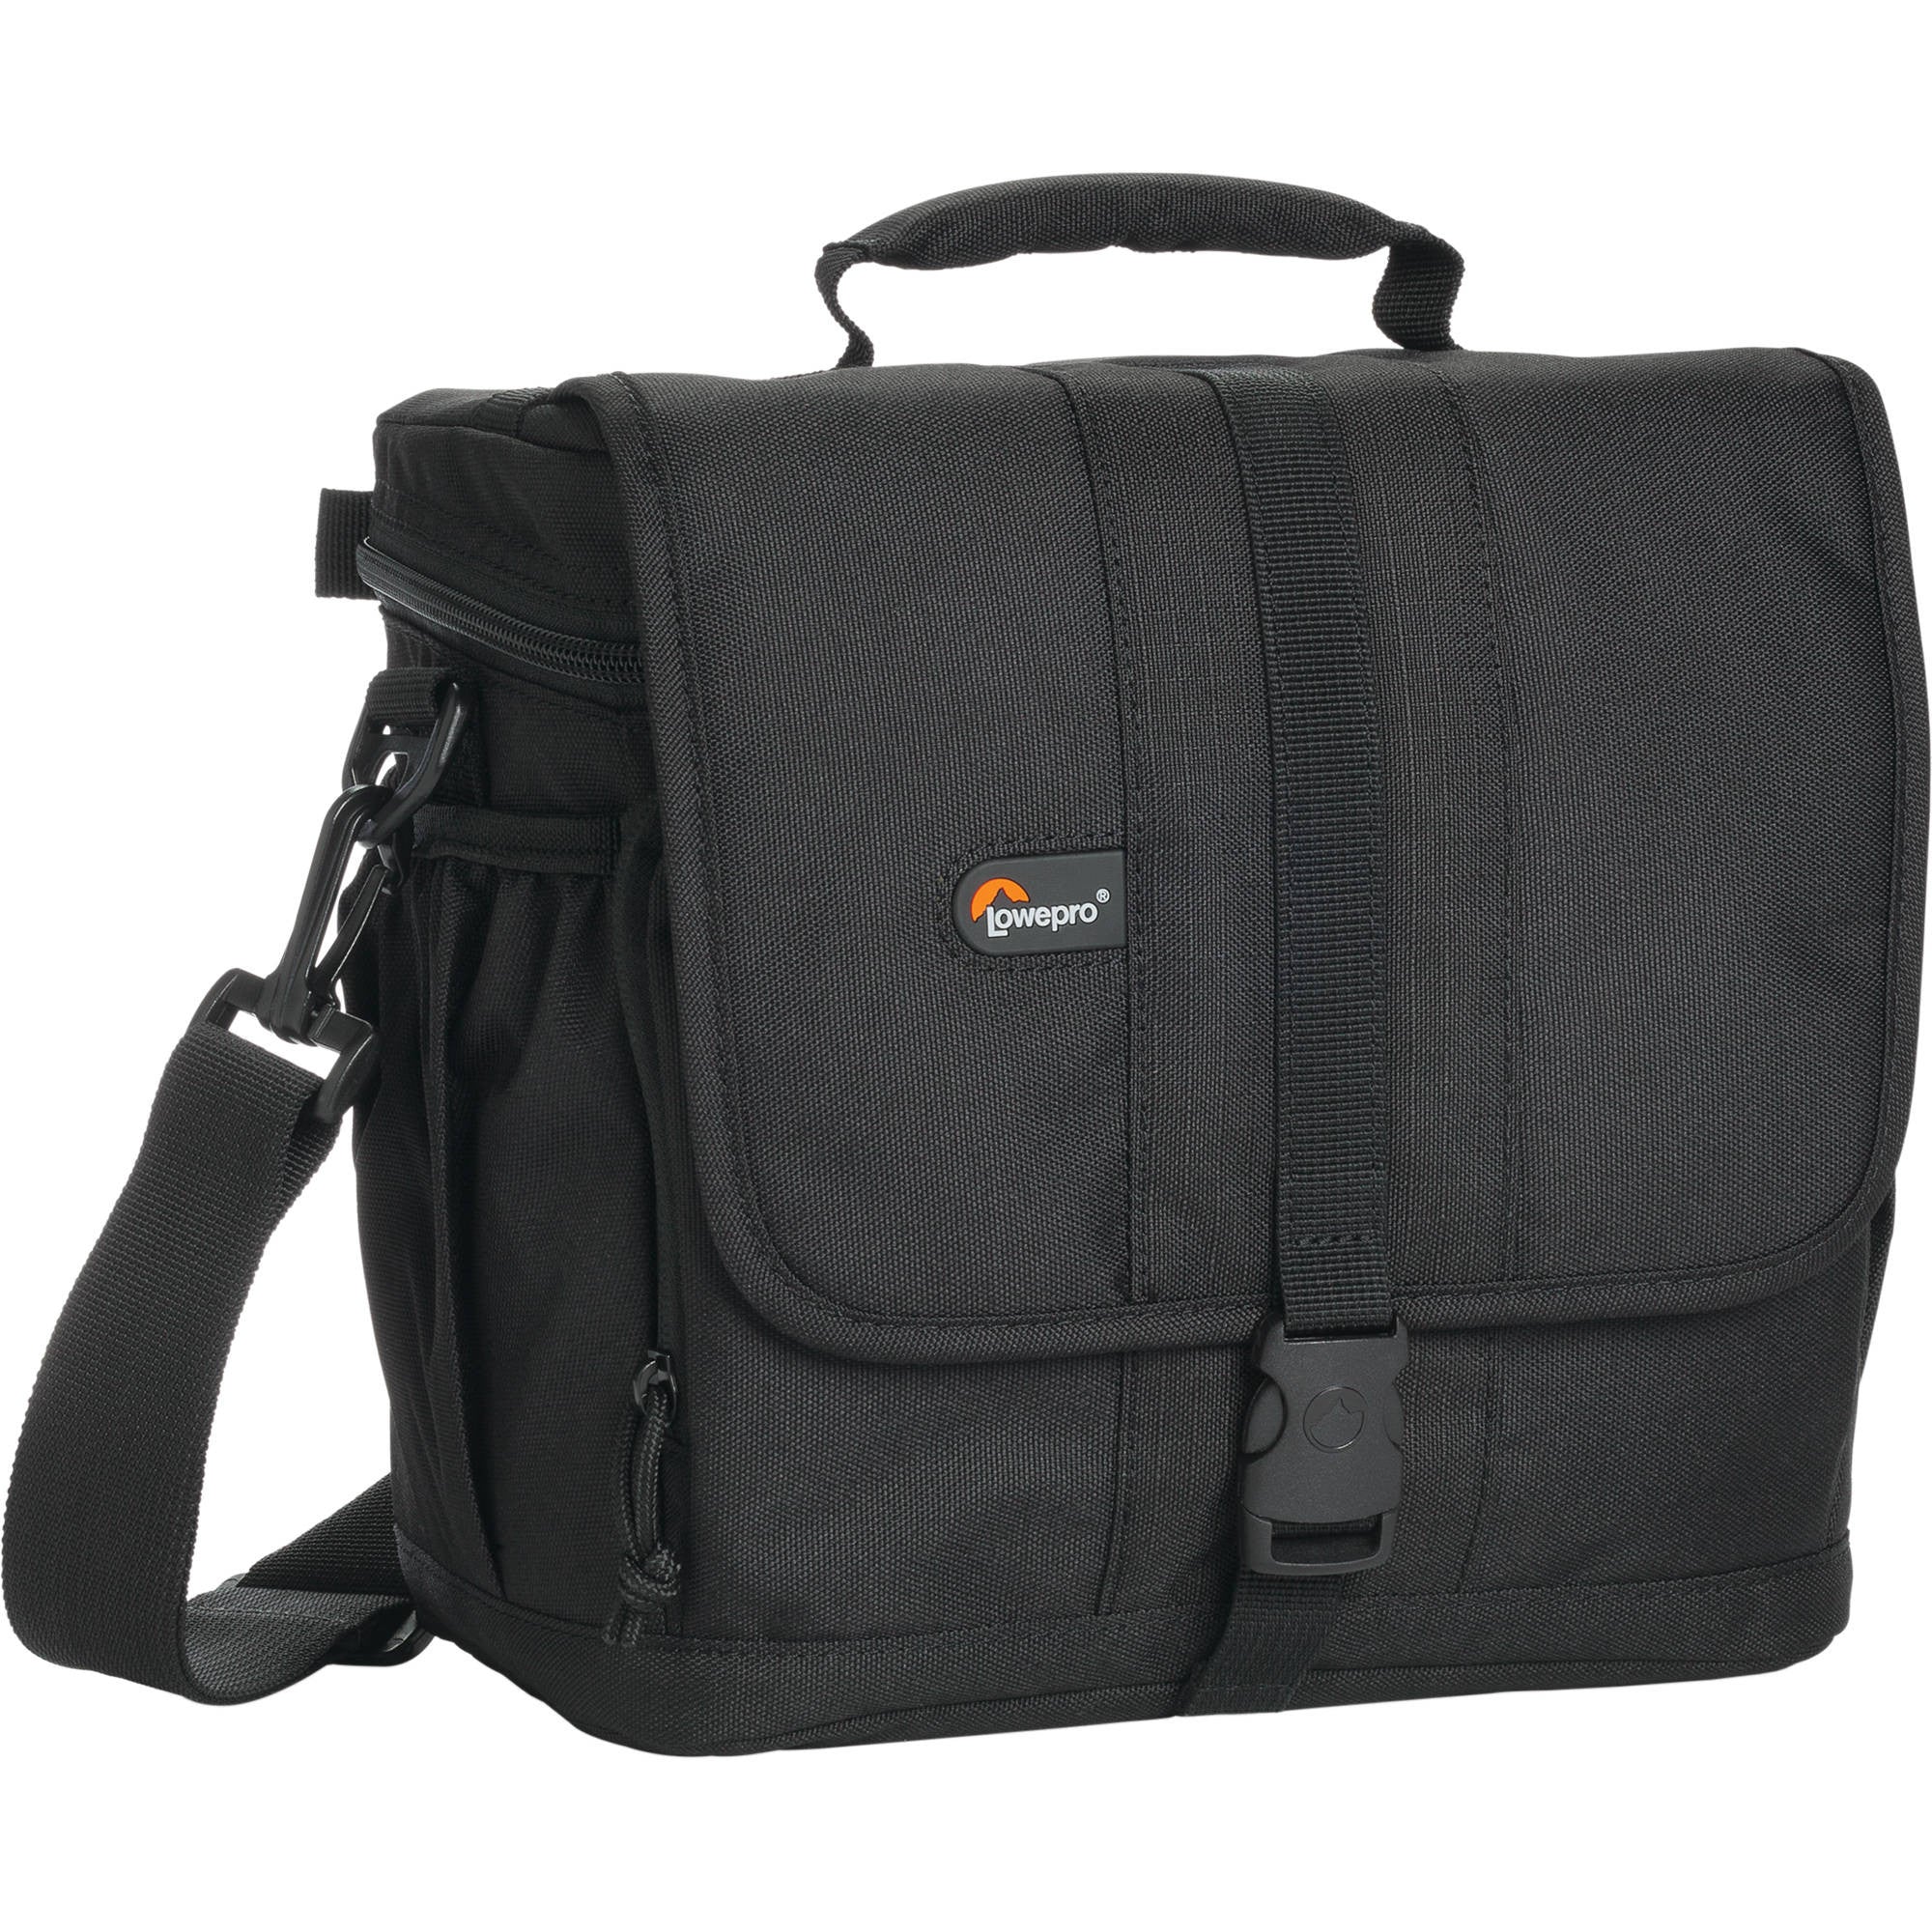 Lowepro Adventura 170 (Black), bags shoulder bags, Lowepro - Pictureline  - 4